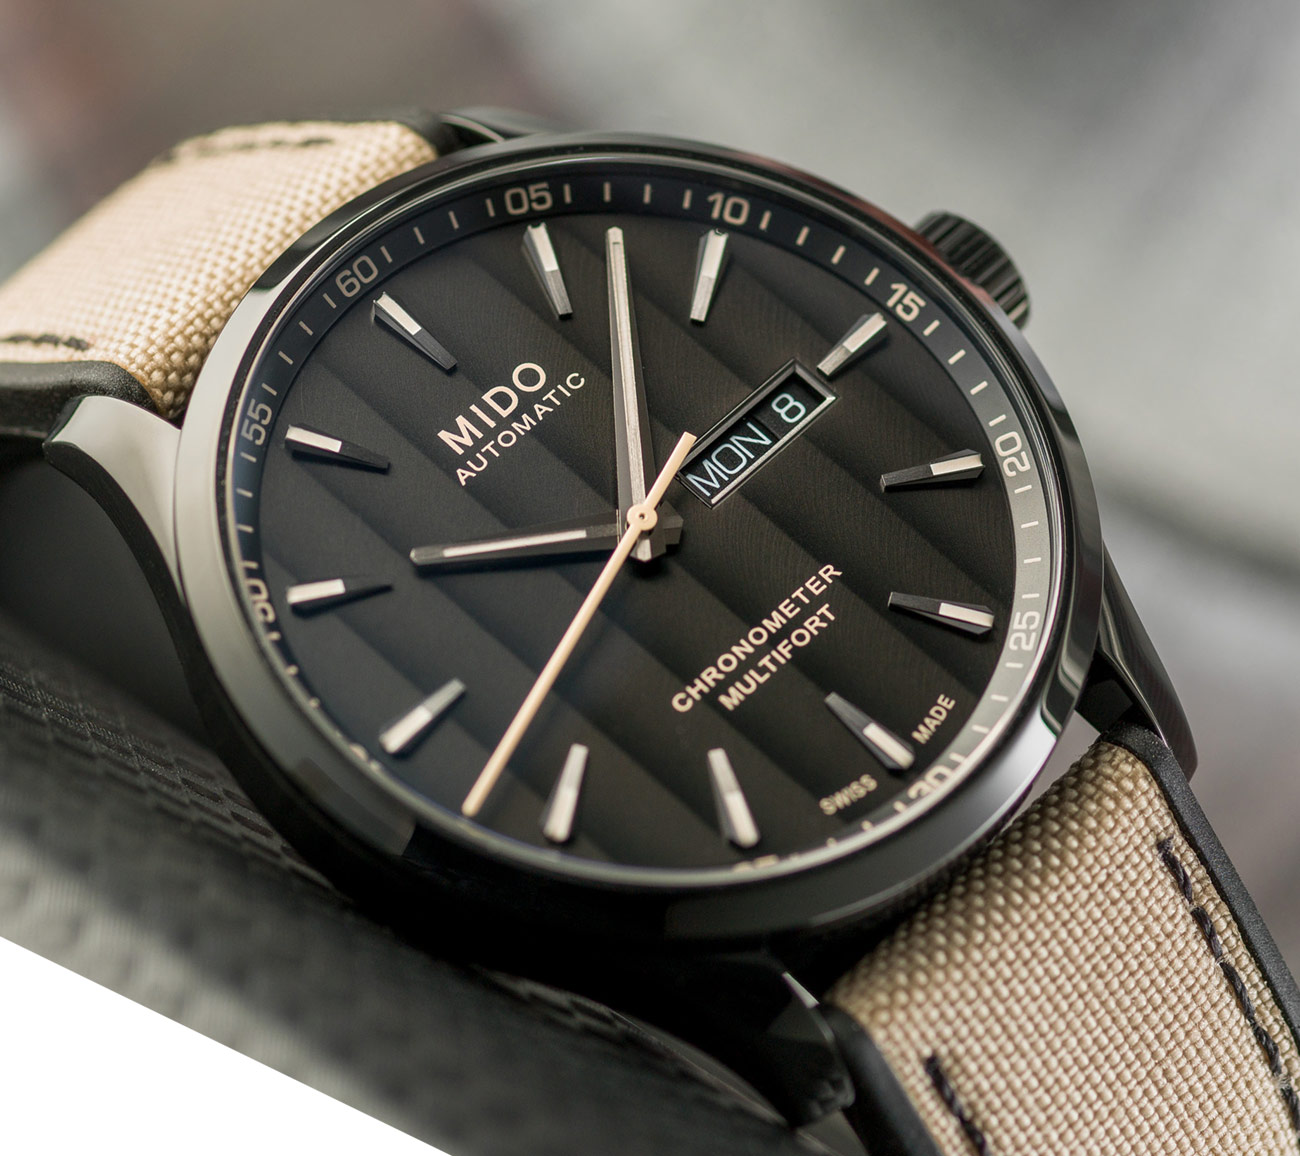 Mido Multifort Chronometer close-up